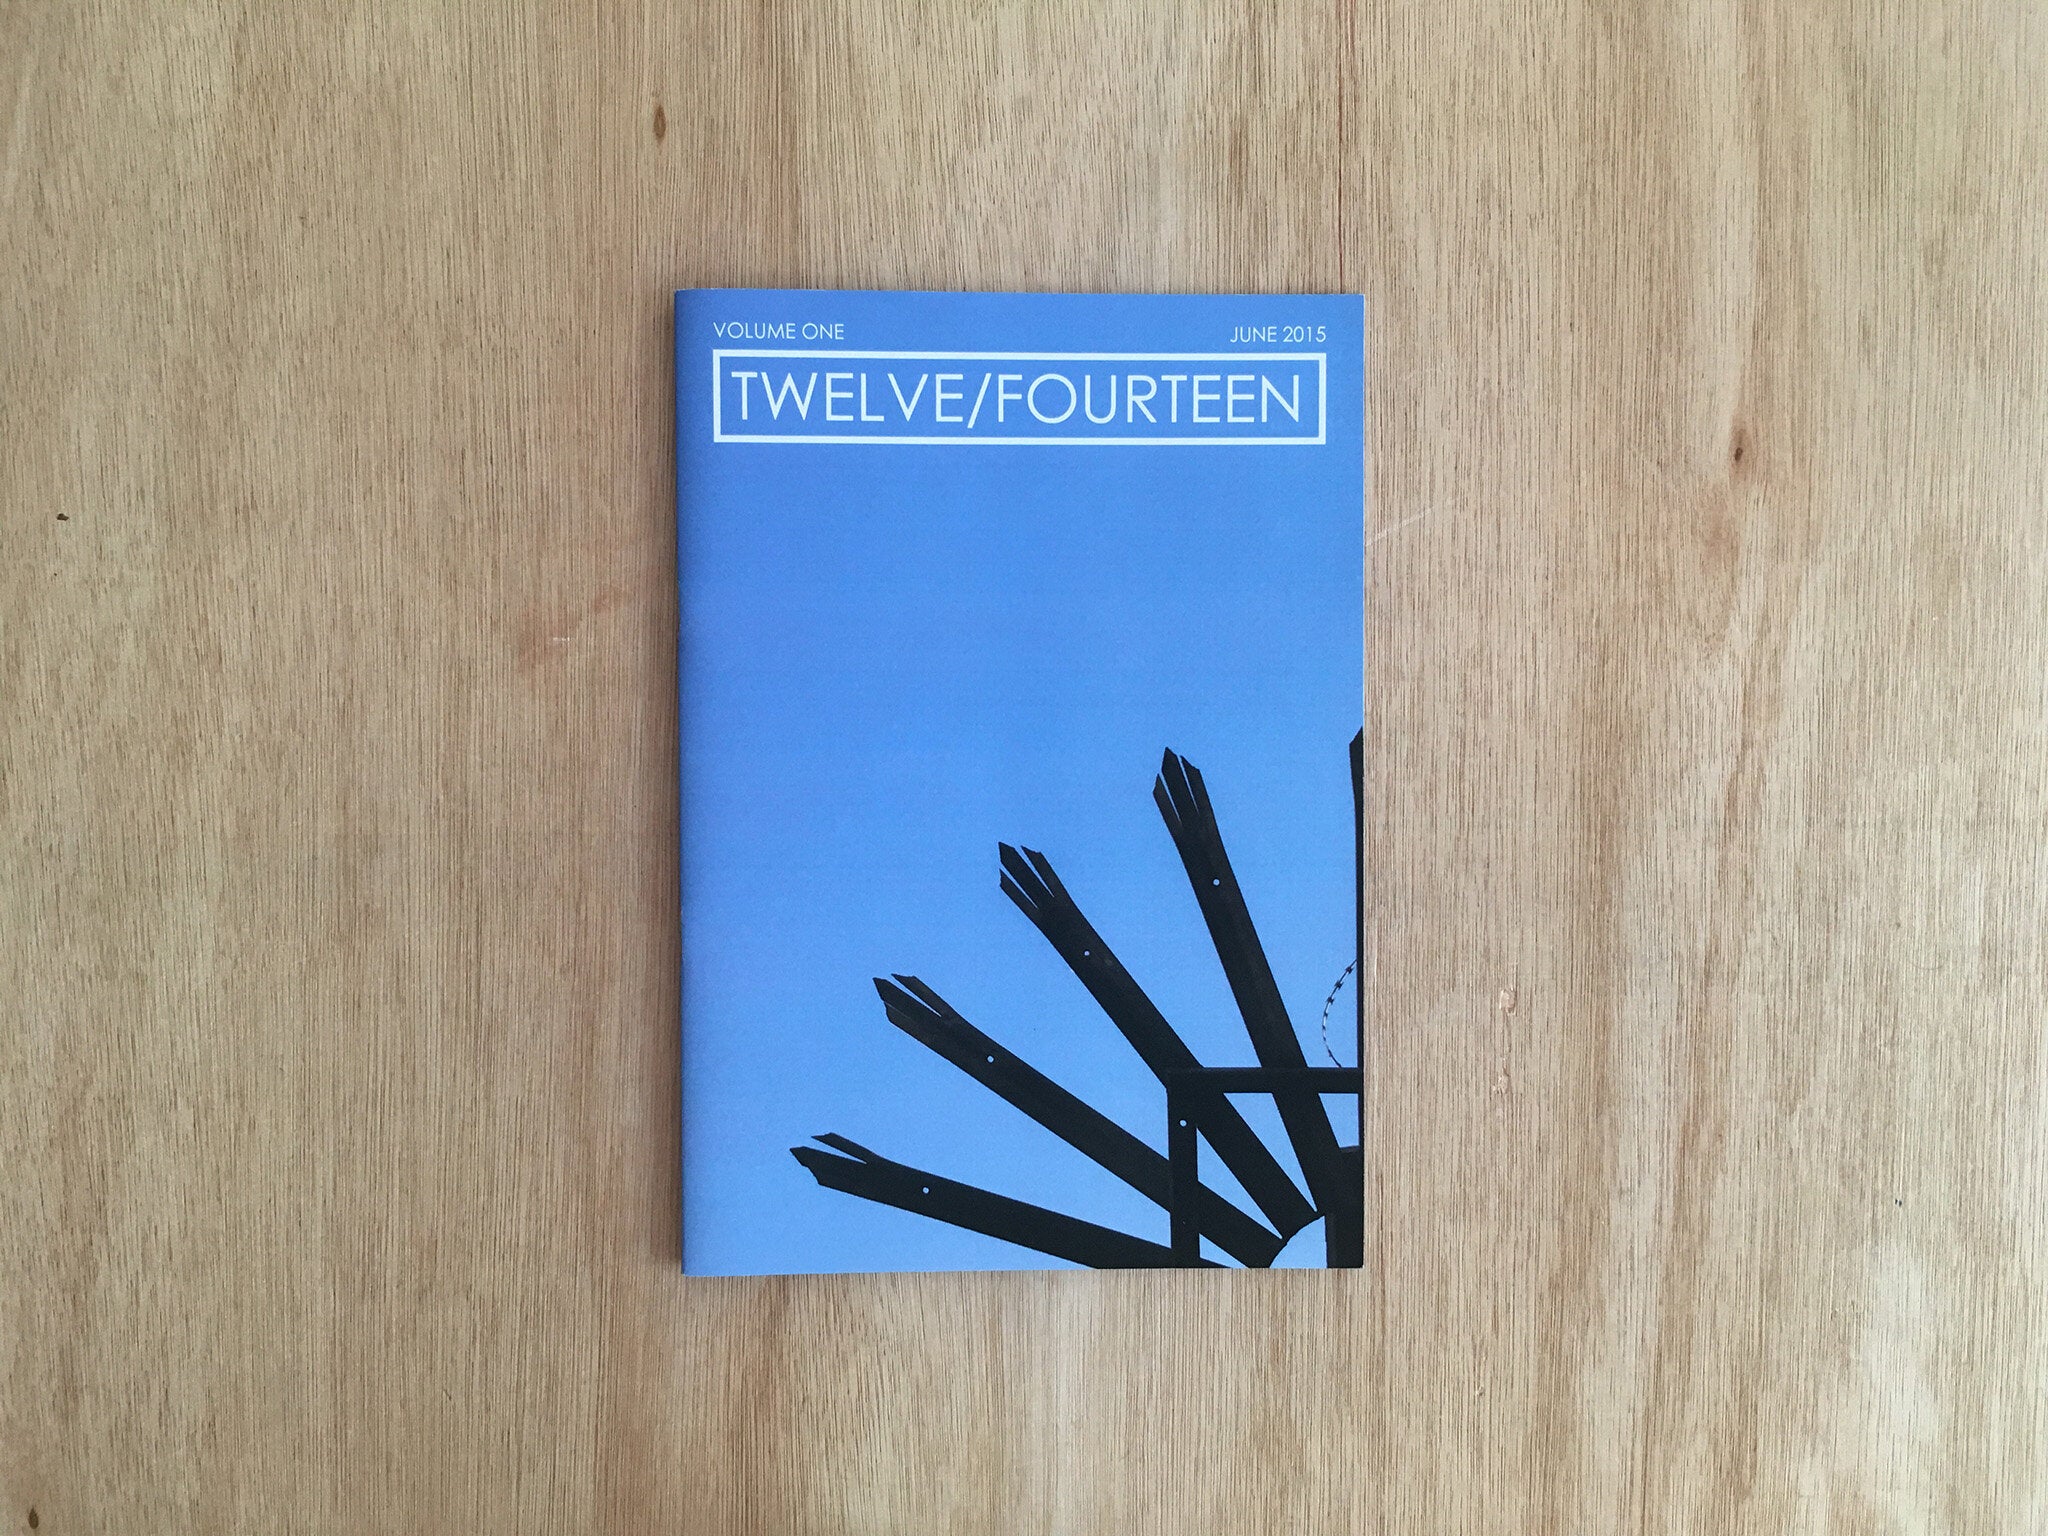 TWELVE/FOURTEEN VOLUME ONE by Various Artists